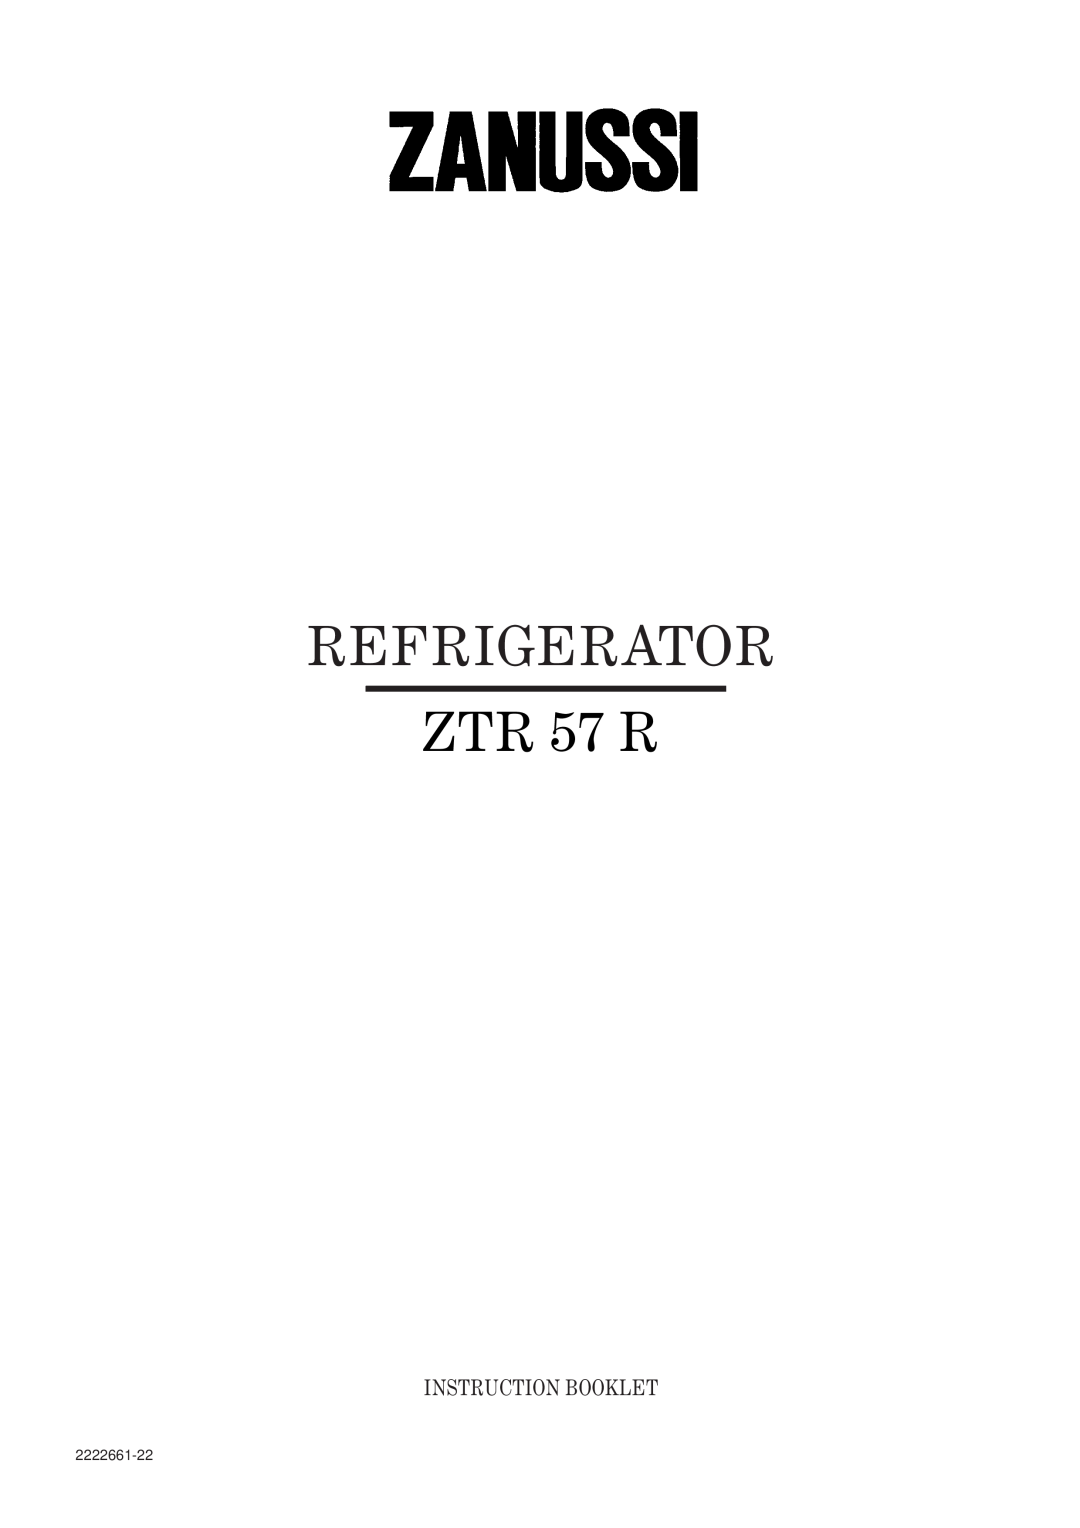 Zanussi ZTR 57 R manual Refrigerator, Instruction Booklet, 2222661-22 